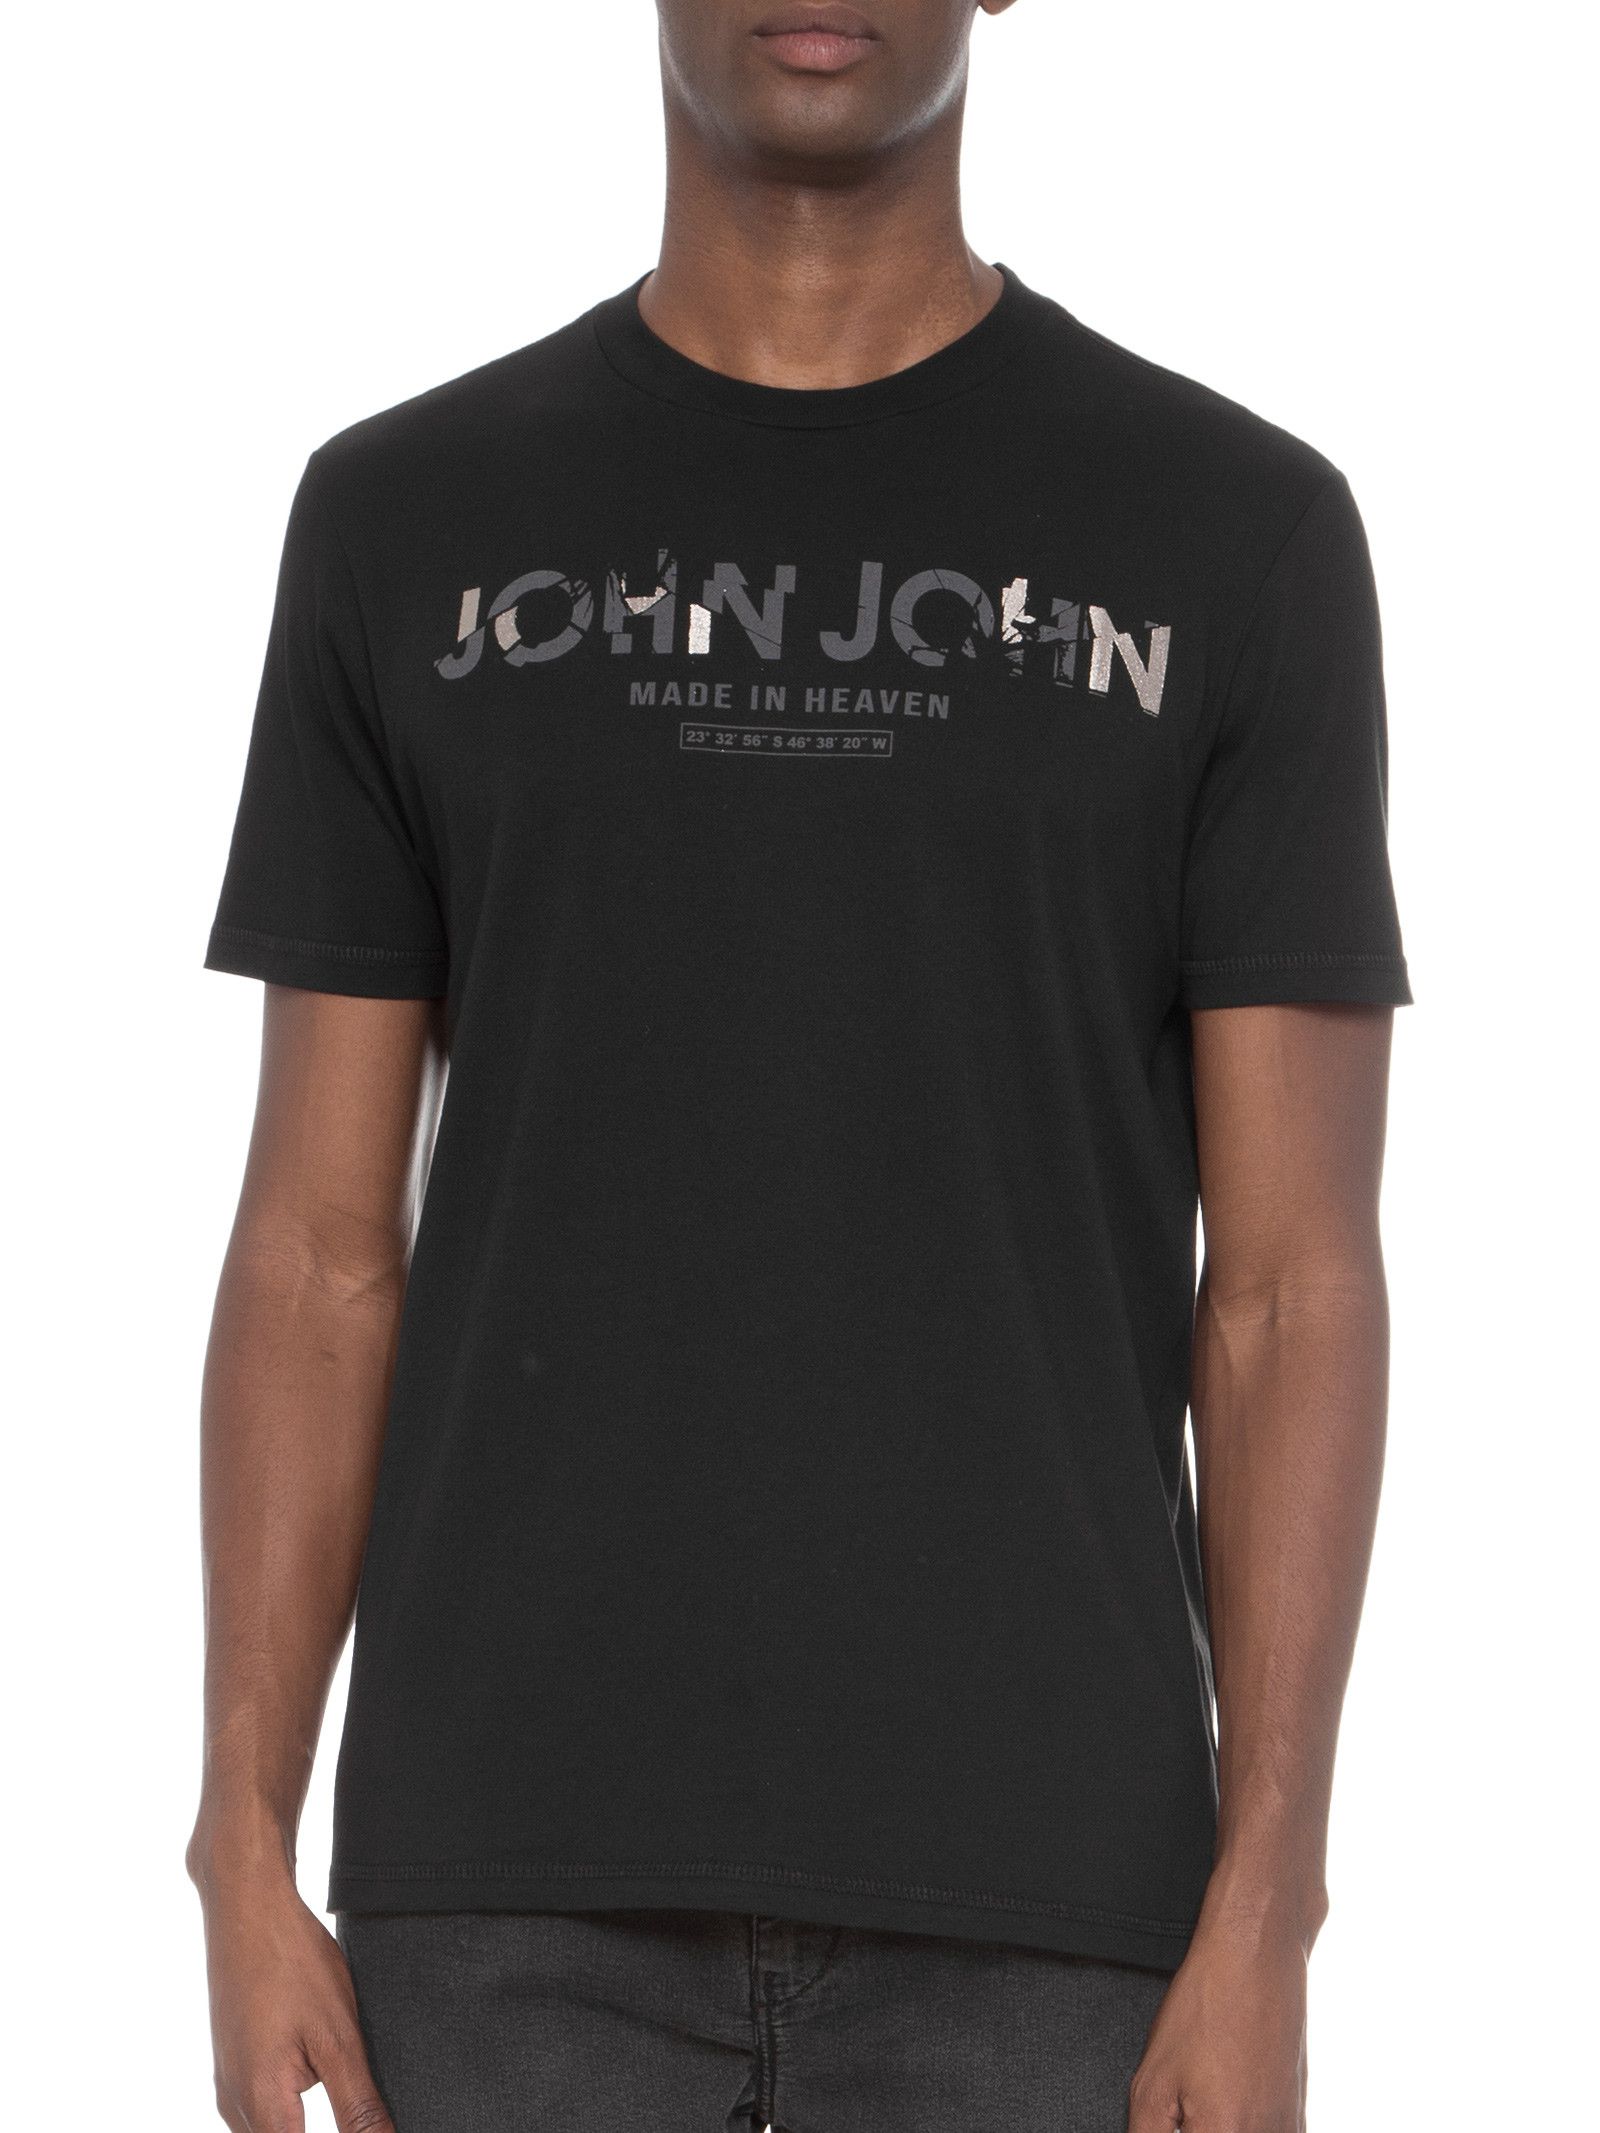 Camiseta John John Broken Masculina Branco - Dom Store Multimarcas  Vestuário Calçados Acessórios